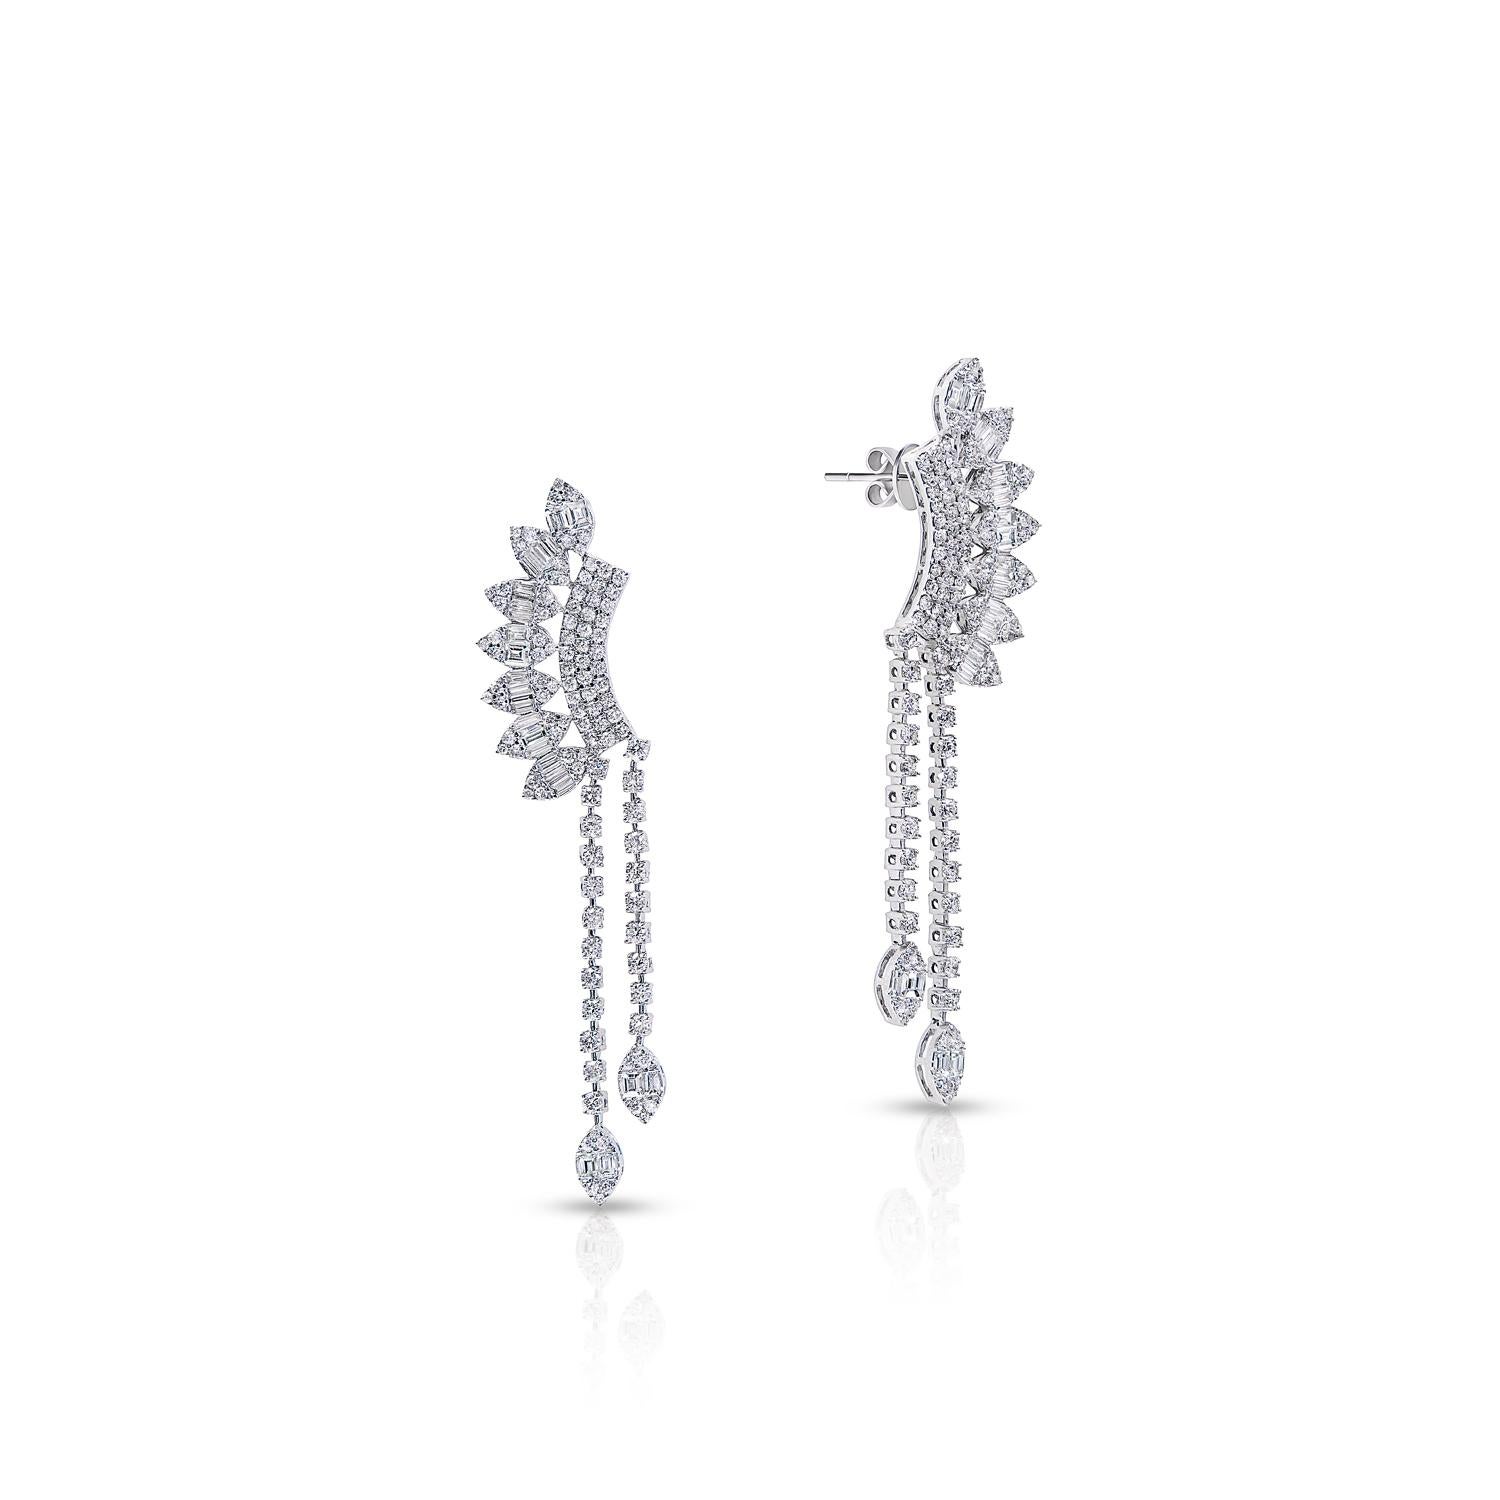 Dangling Diamond Earrings For Ladies:

Main Diamonds:
Carat Weight: 3.85 Carats
Shape: Combine Mix Shape

Metal: 14 Karat White Gold
Style: Dangling Earrings

Total Carat Weight: 3.85 Carats